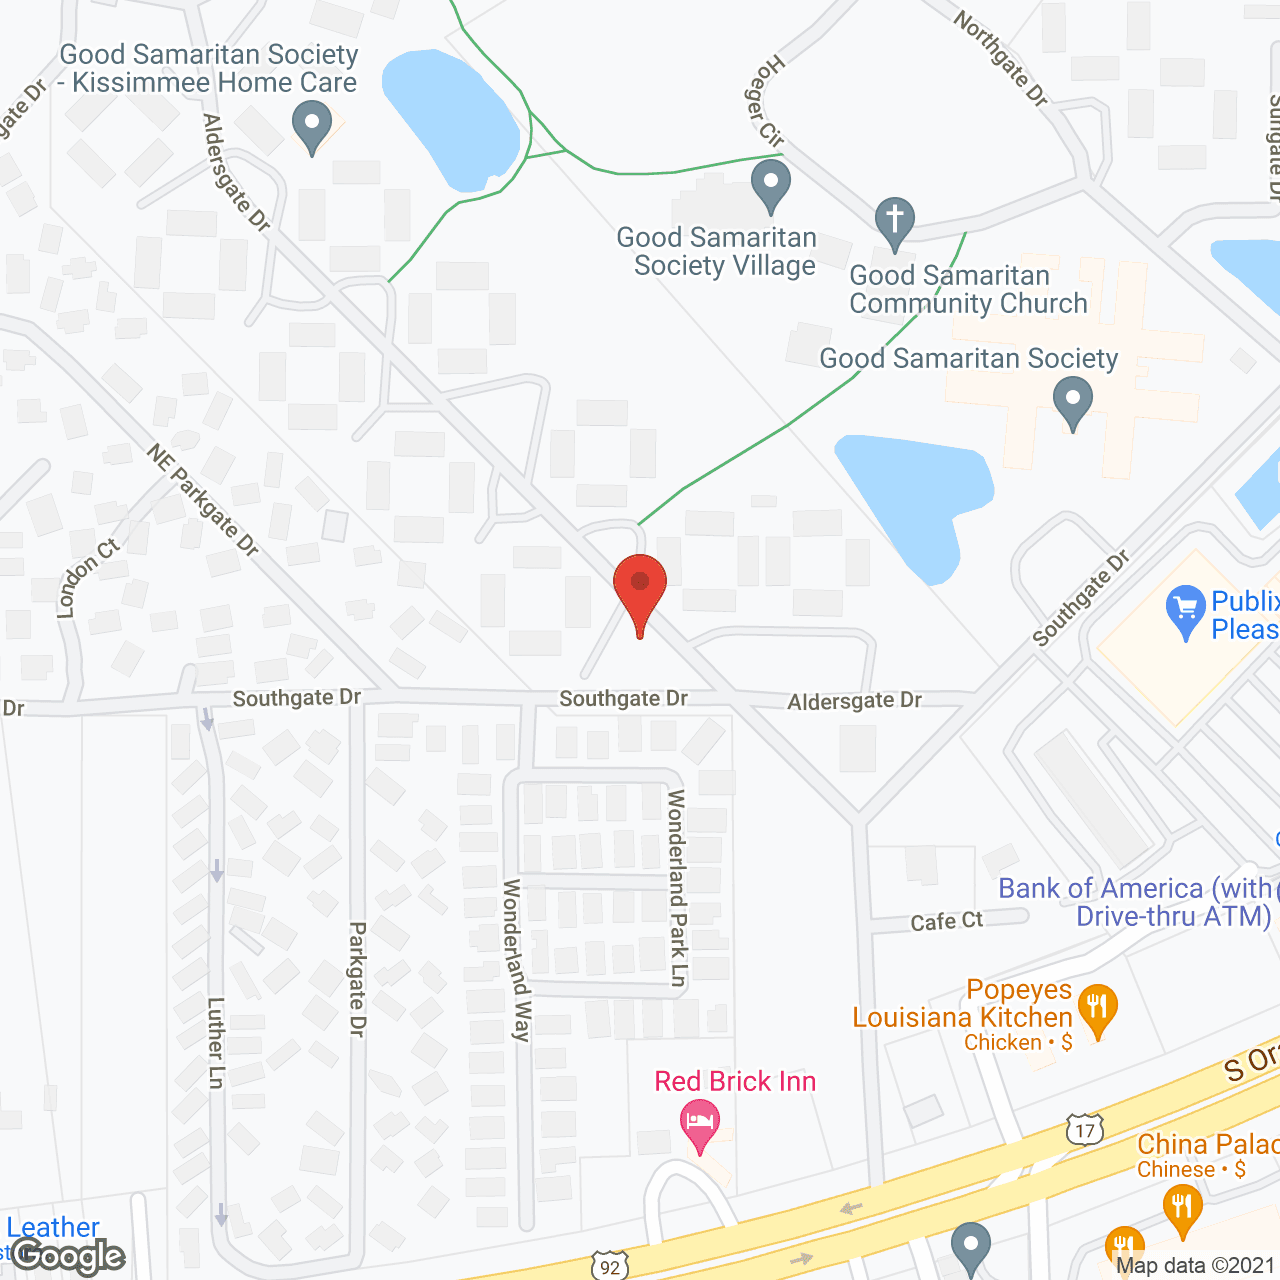 Good Samaritan Village At Kissimmee in google map